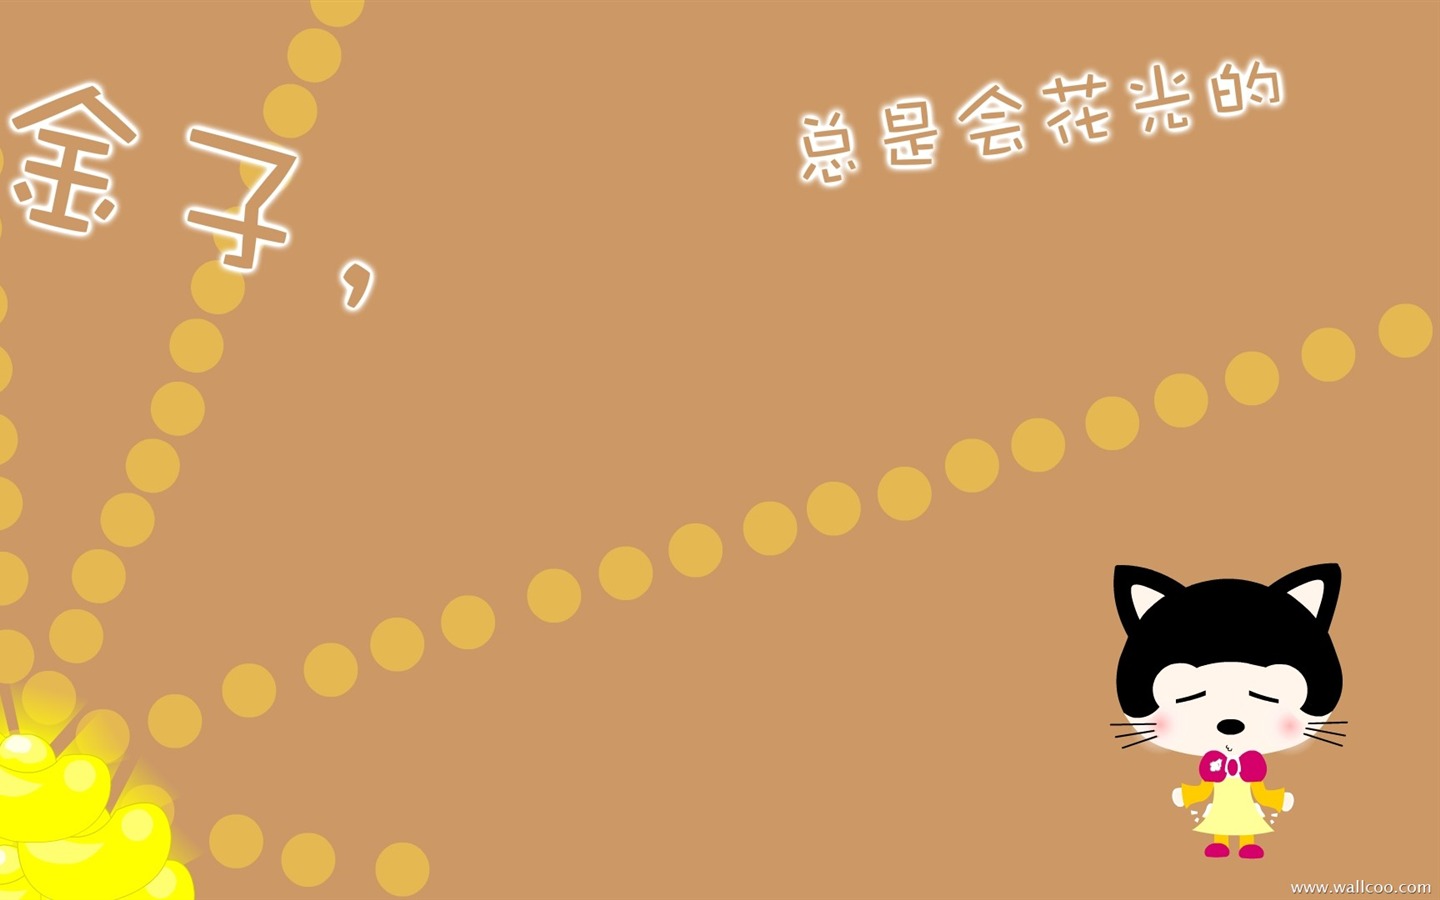 Baby cat cartoon wallpaper (4) #2 - 1440x900